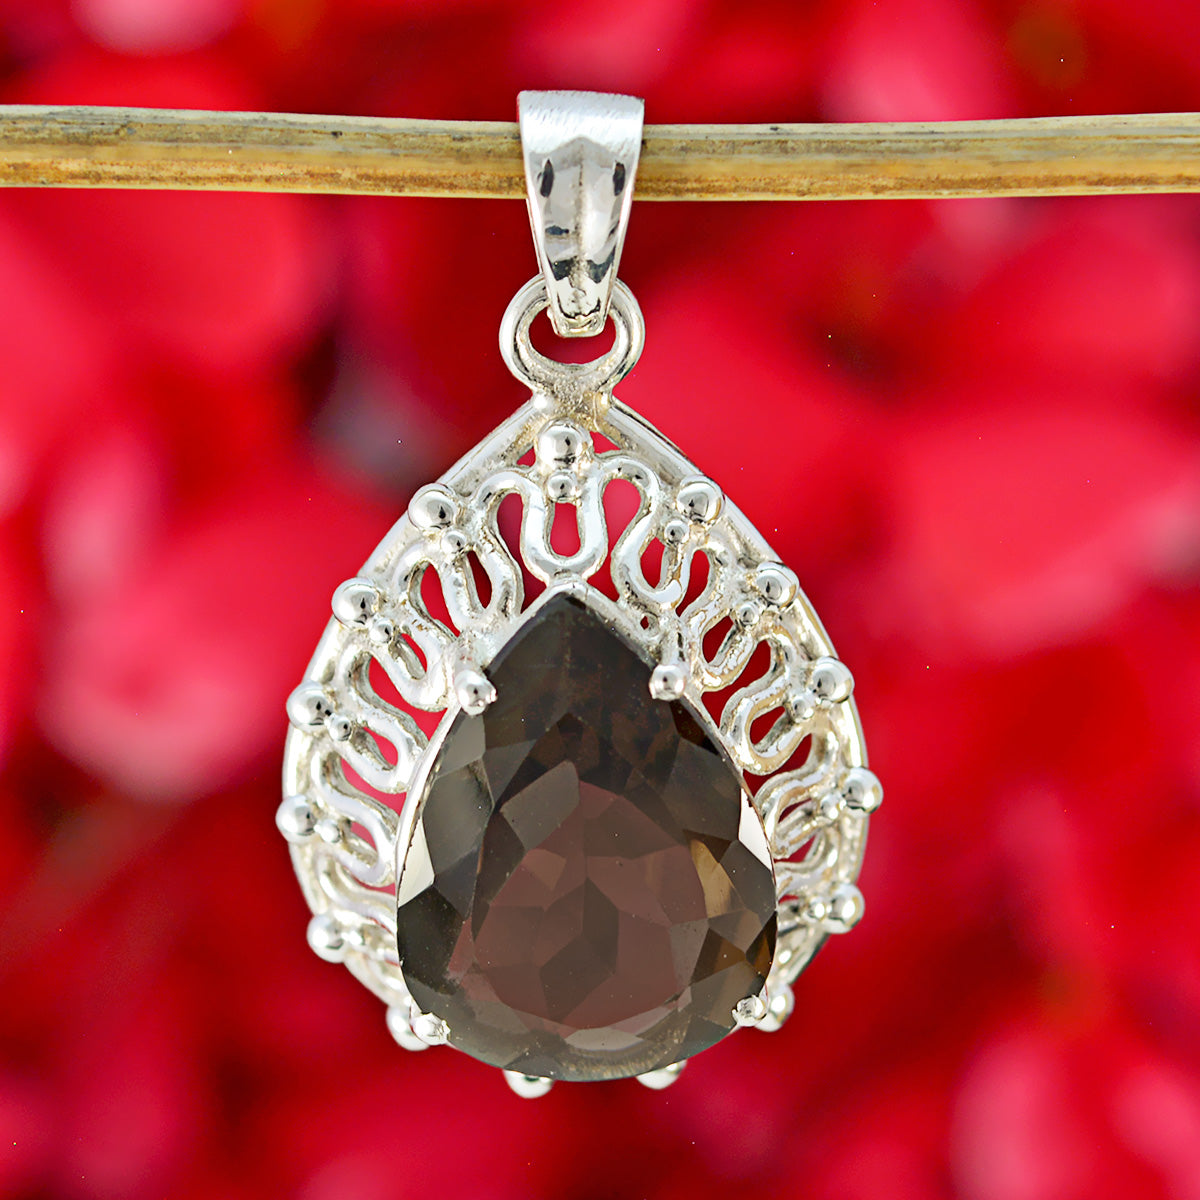 Riyo Genuine Gems Pear Faceted Brown smoky quartz 925 Silver Pendant gift for grandmom